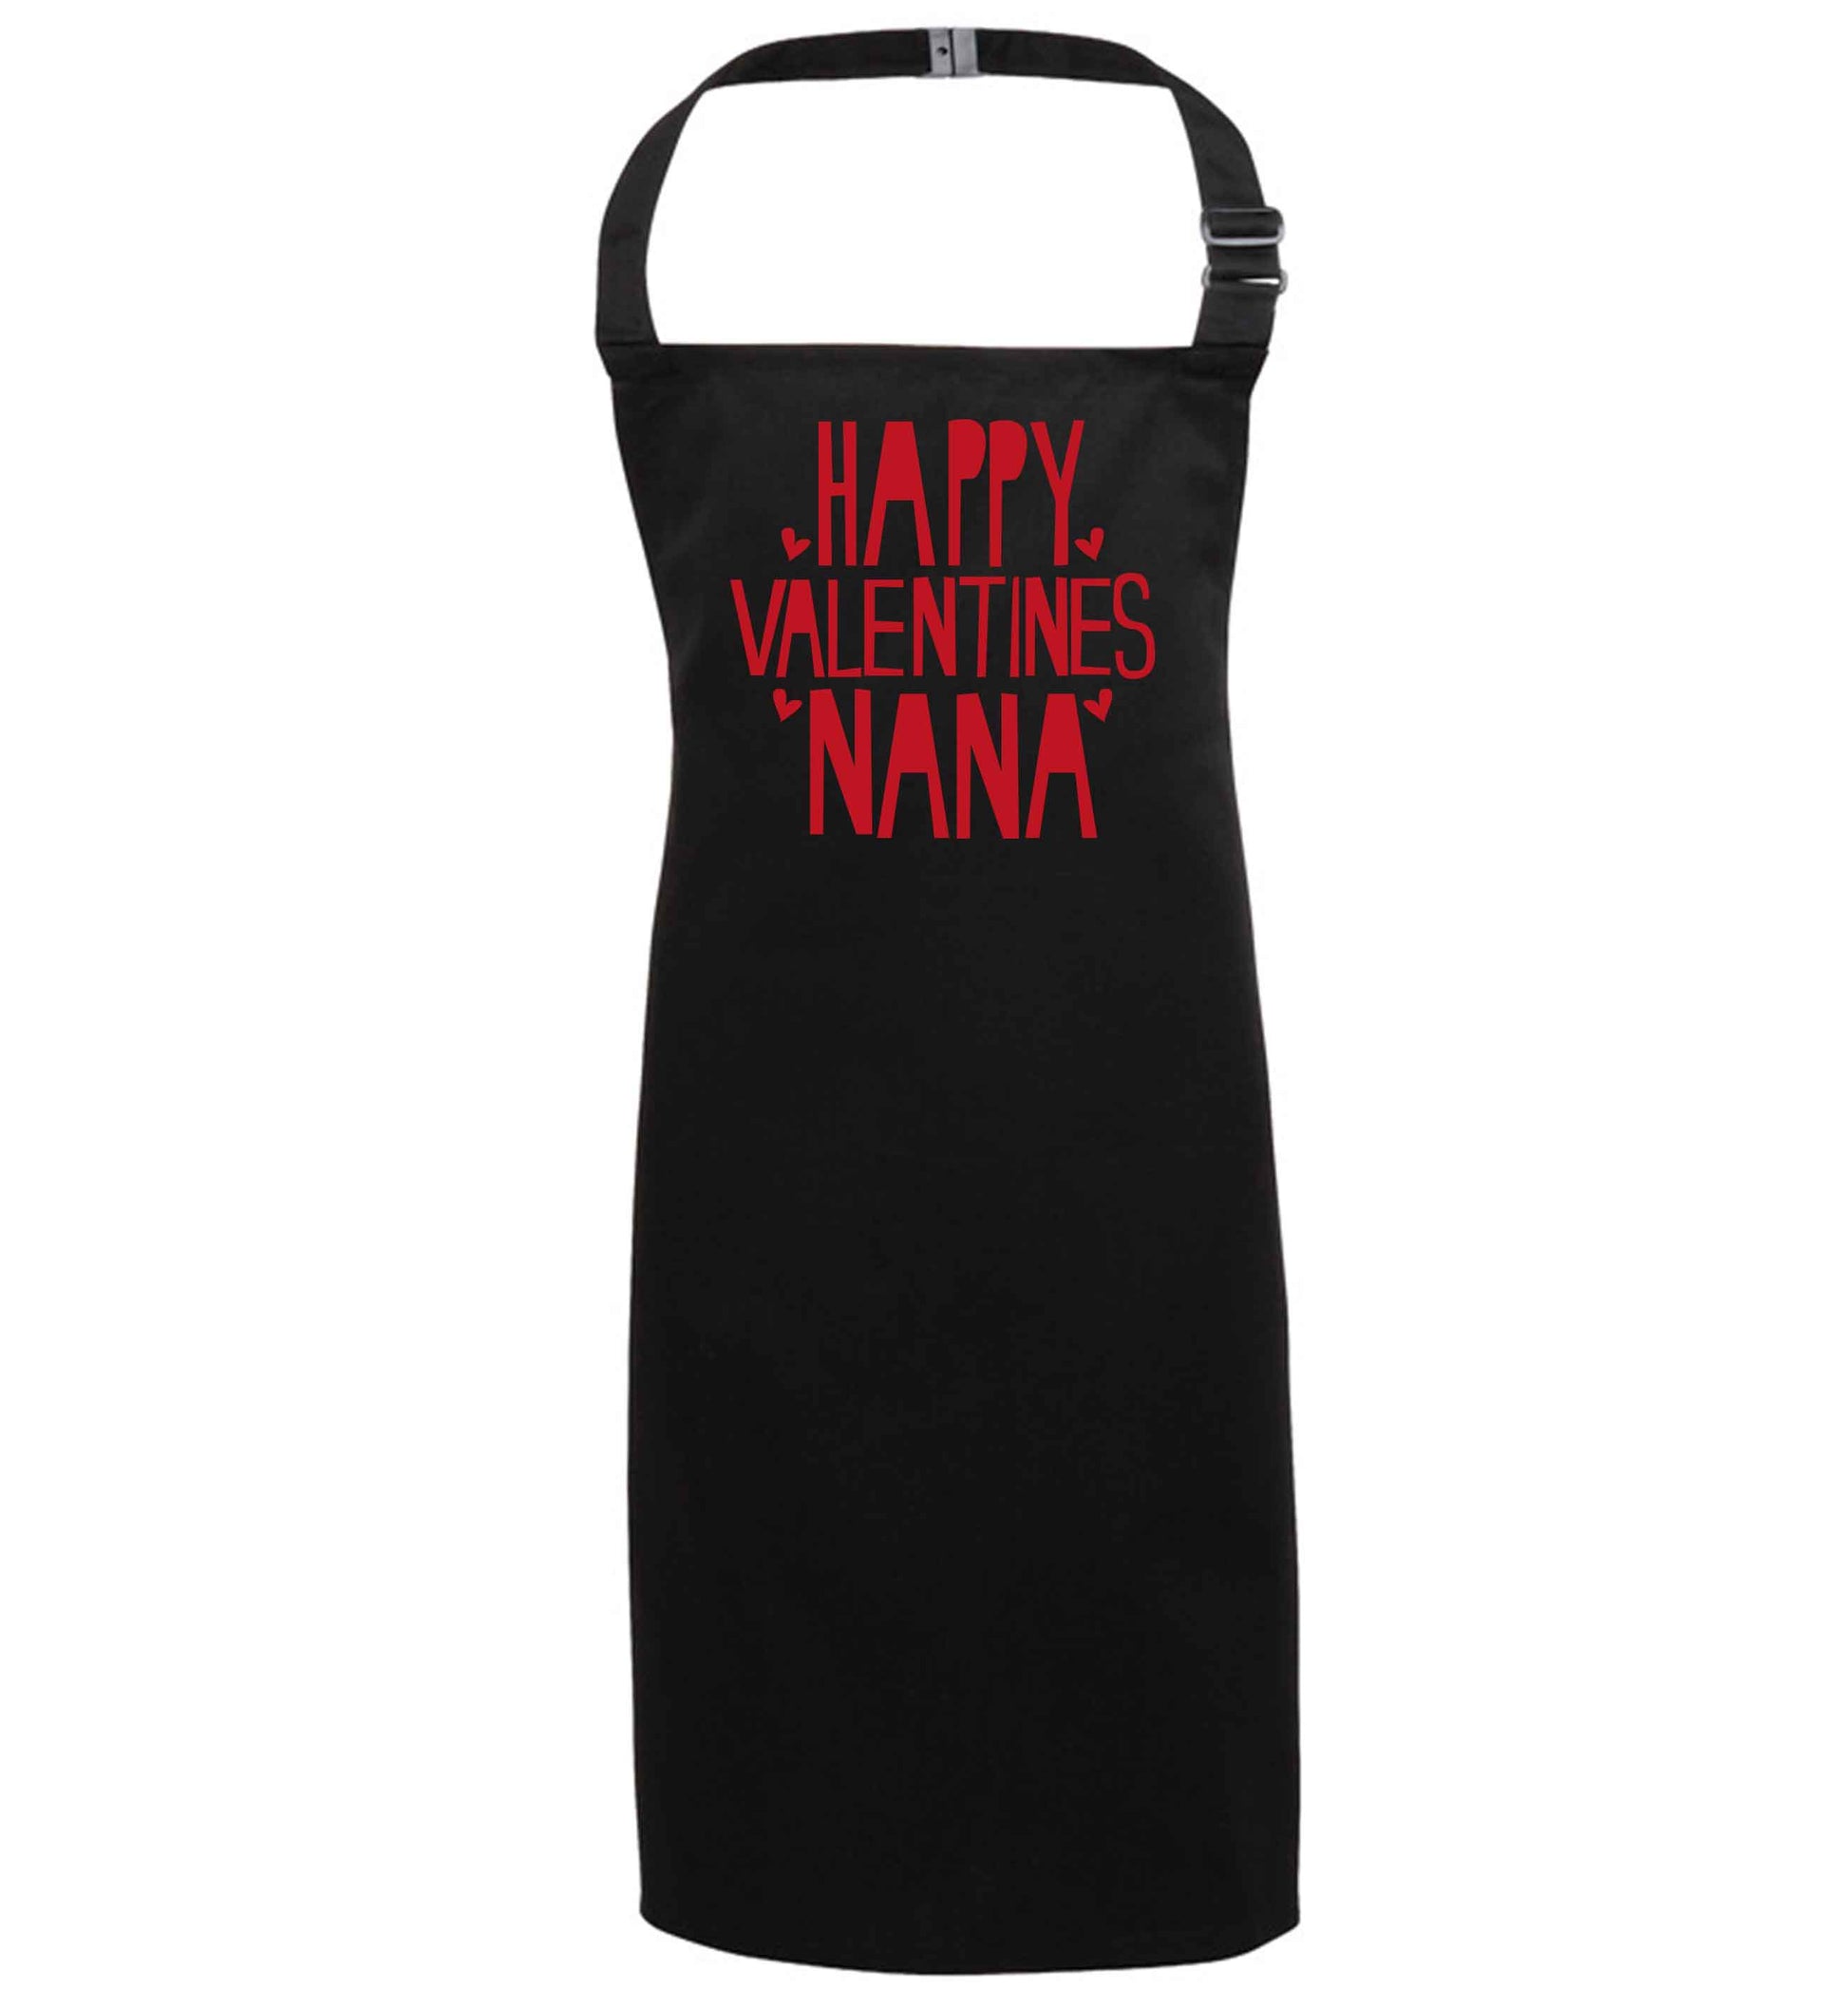 Happy valentines nana black apron 7-10 years